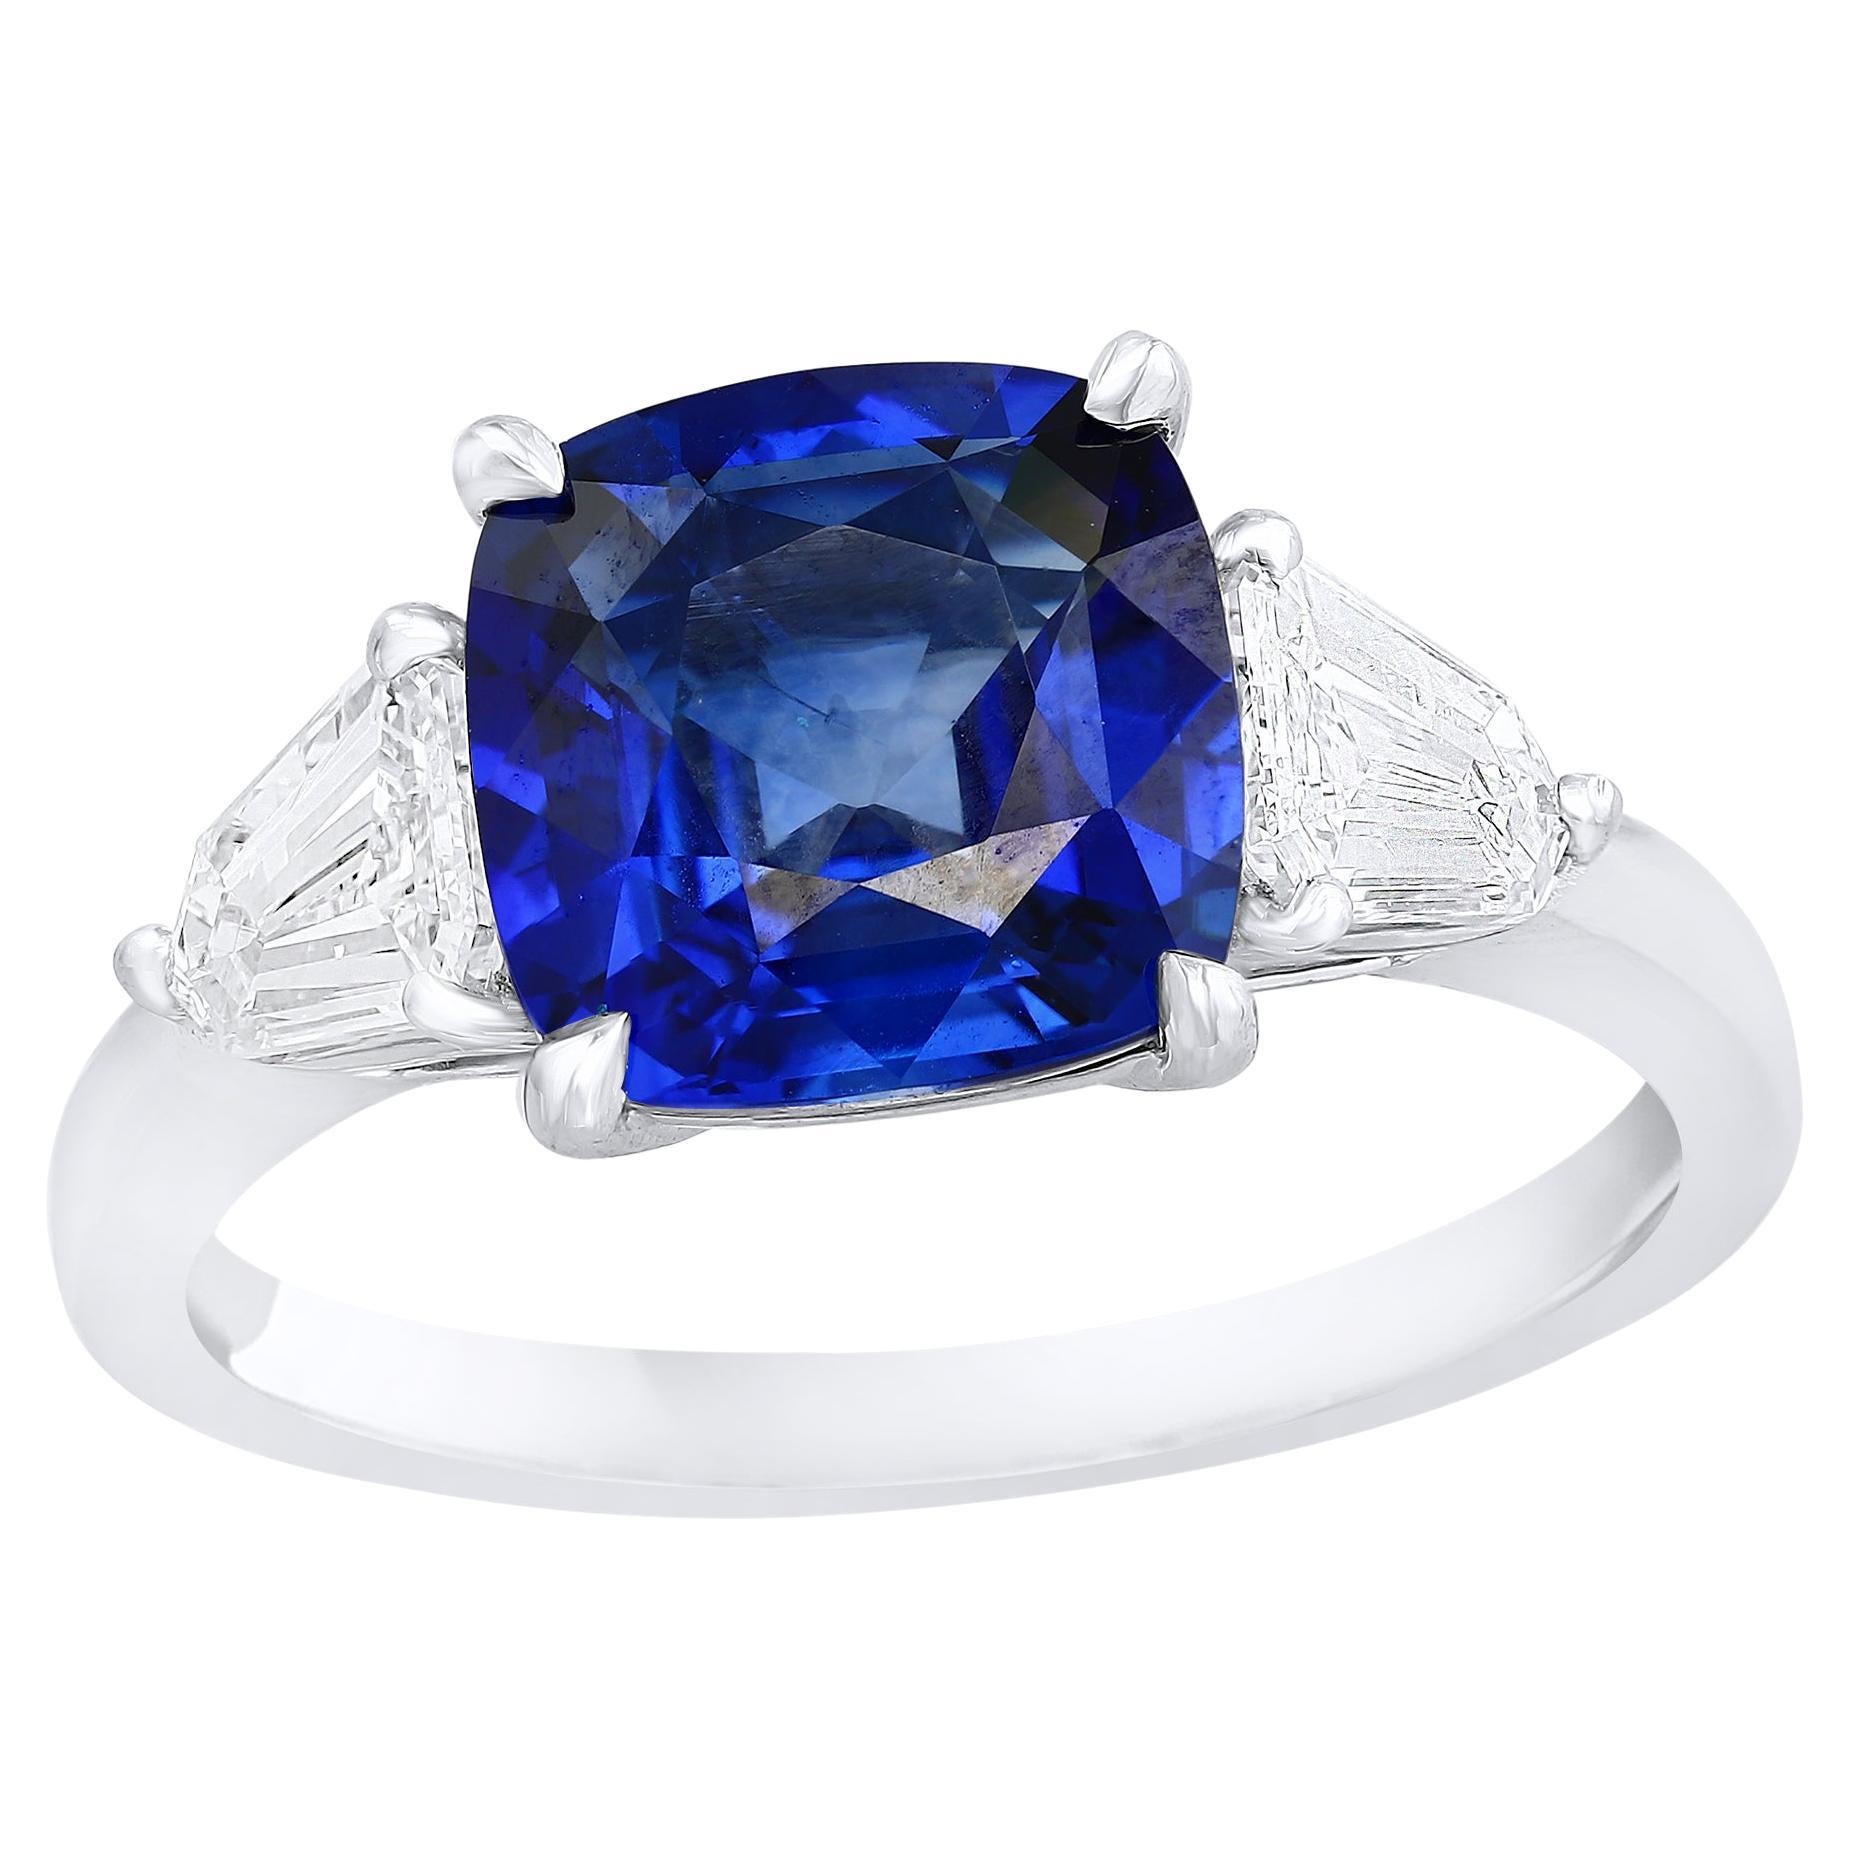 2.60 Carat Cushion Cut Blue Sapphire Diamond Three-Stone Ring in Platinum For Sale